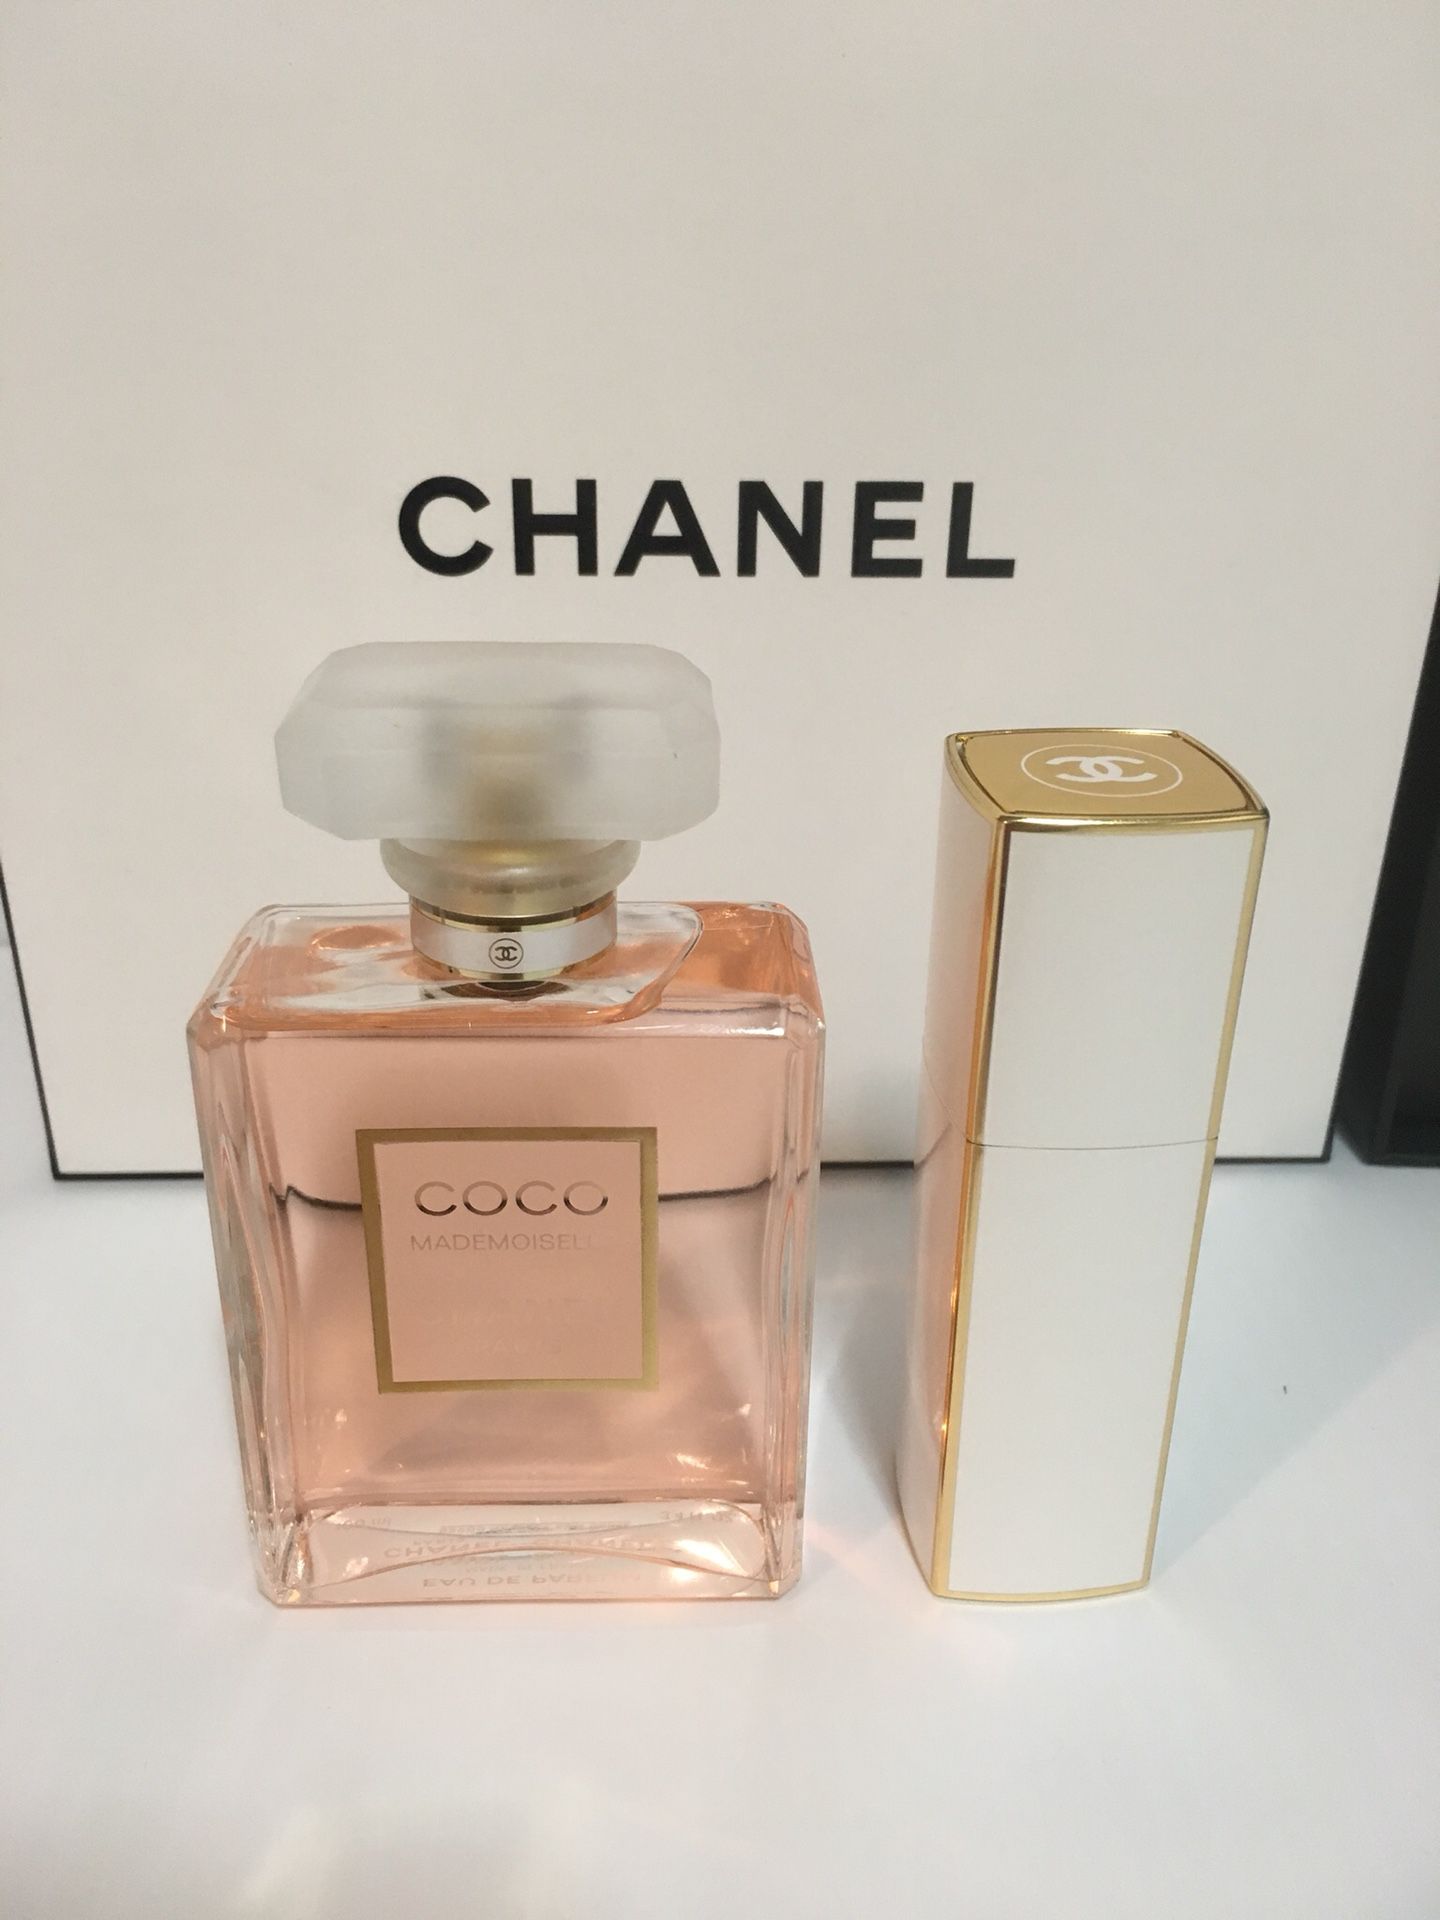 coco chanel perfume 3.4 oz women